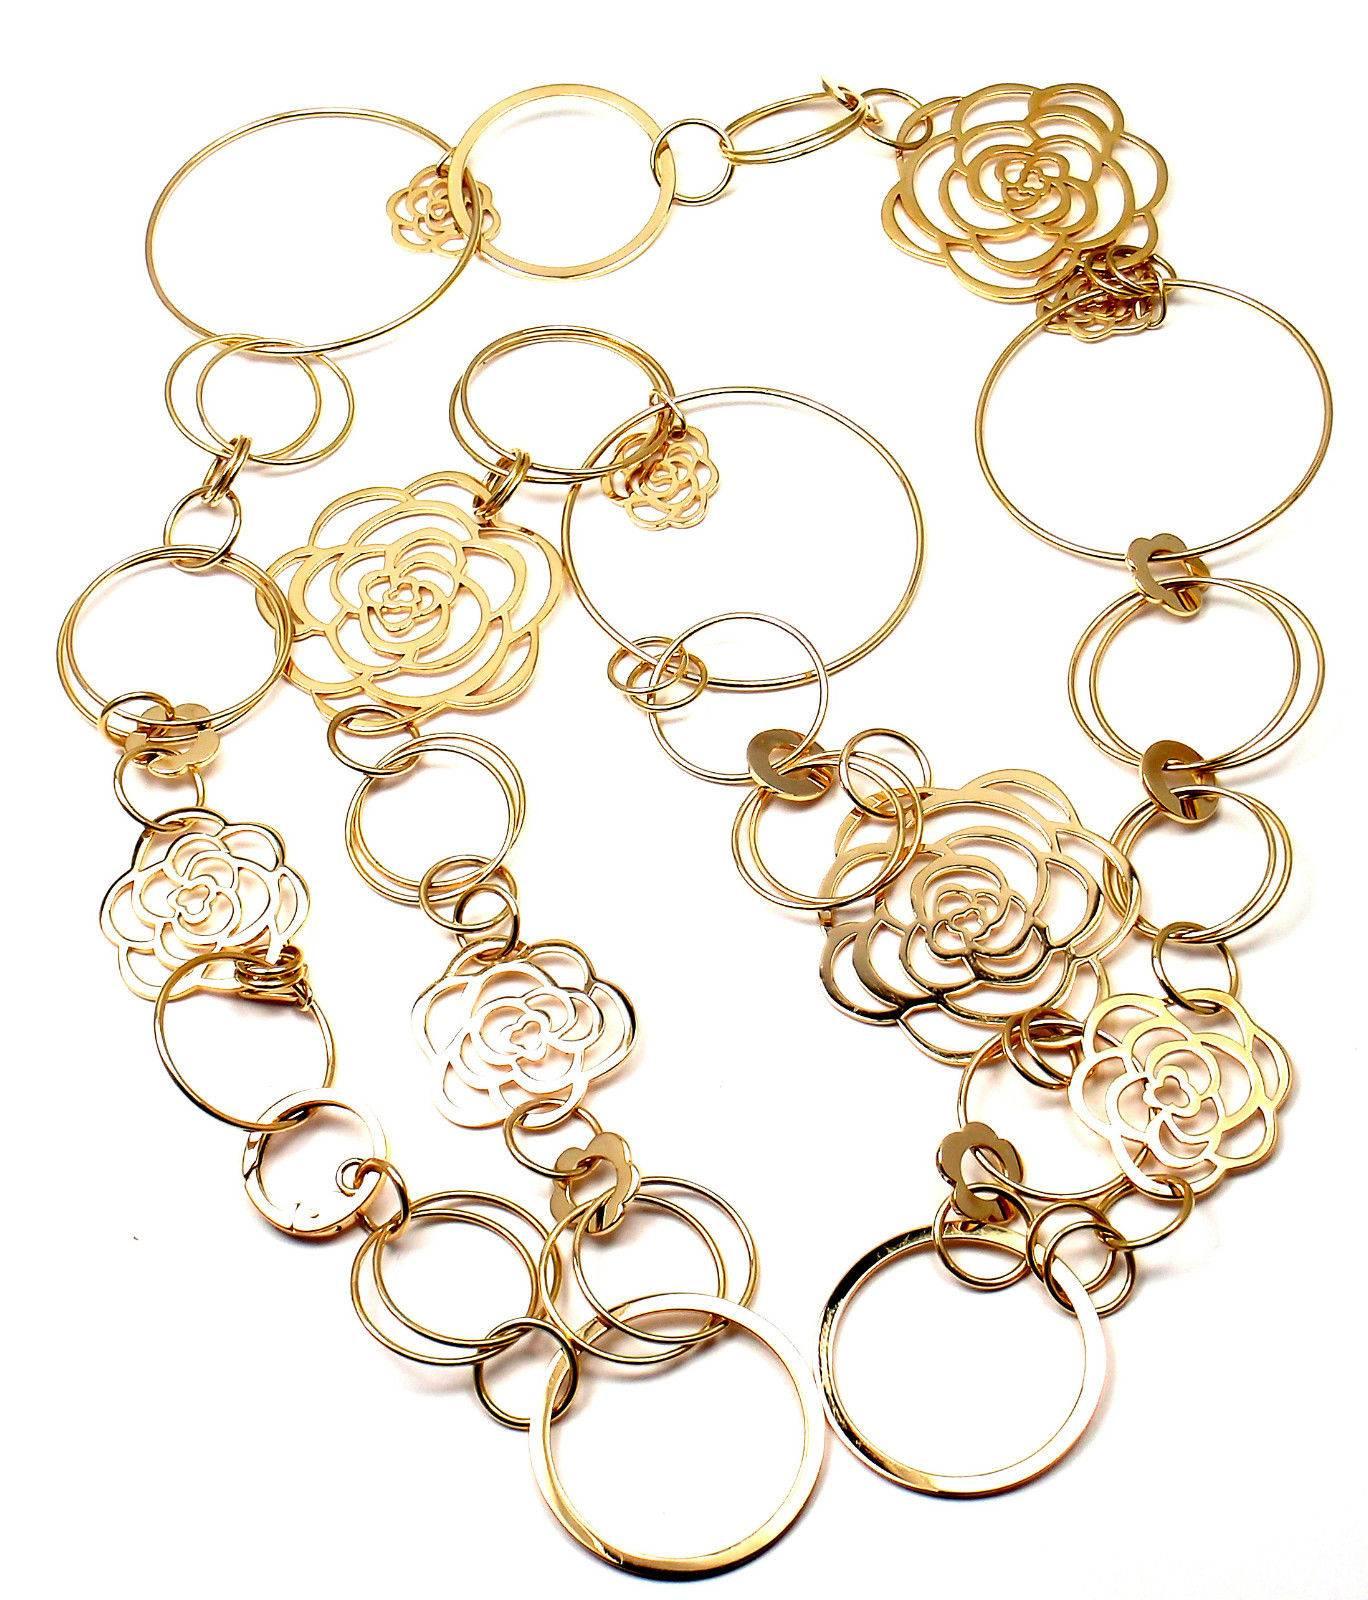 18k Yellow Gold Camélia Camellia Sautoir Flower Long Link Necklace by Chanel. 

Details: 
Length: 32